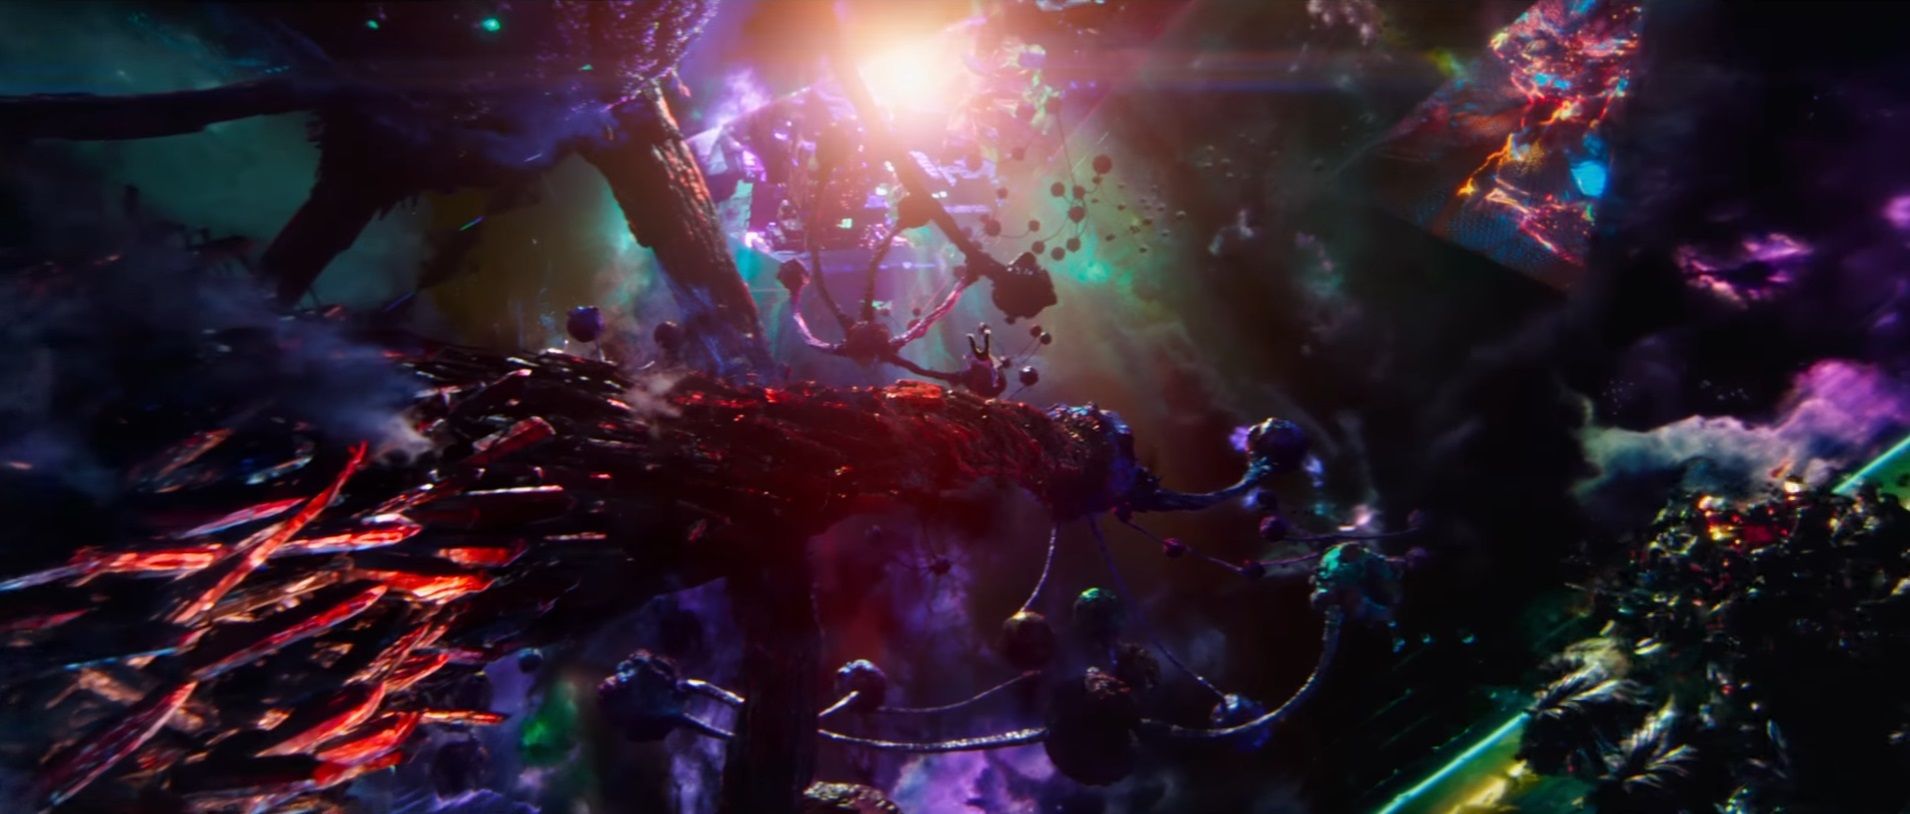 Doctor Strange included some psychedelic, Steve Ditko-inspired visuals.